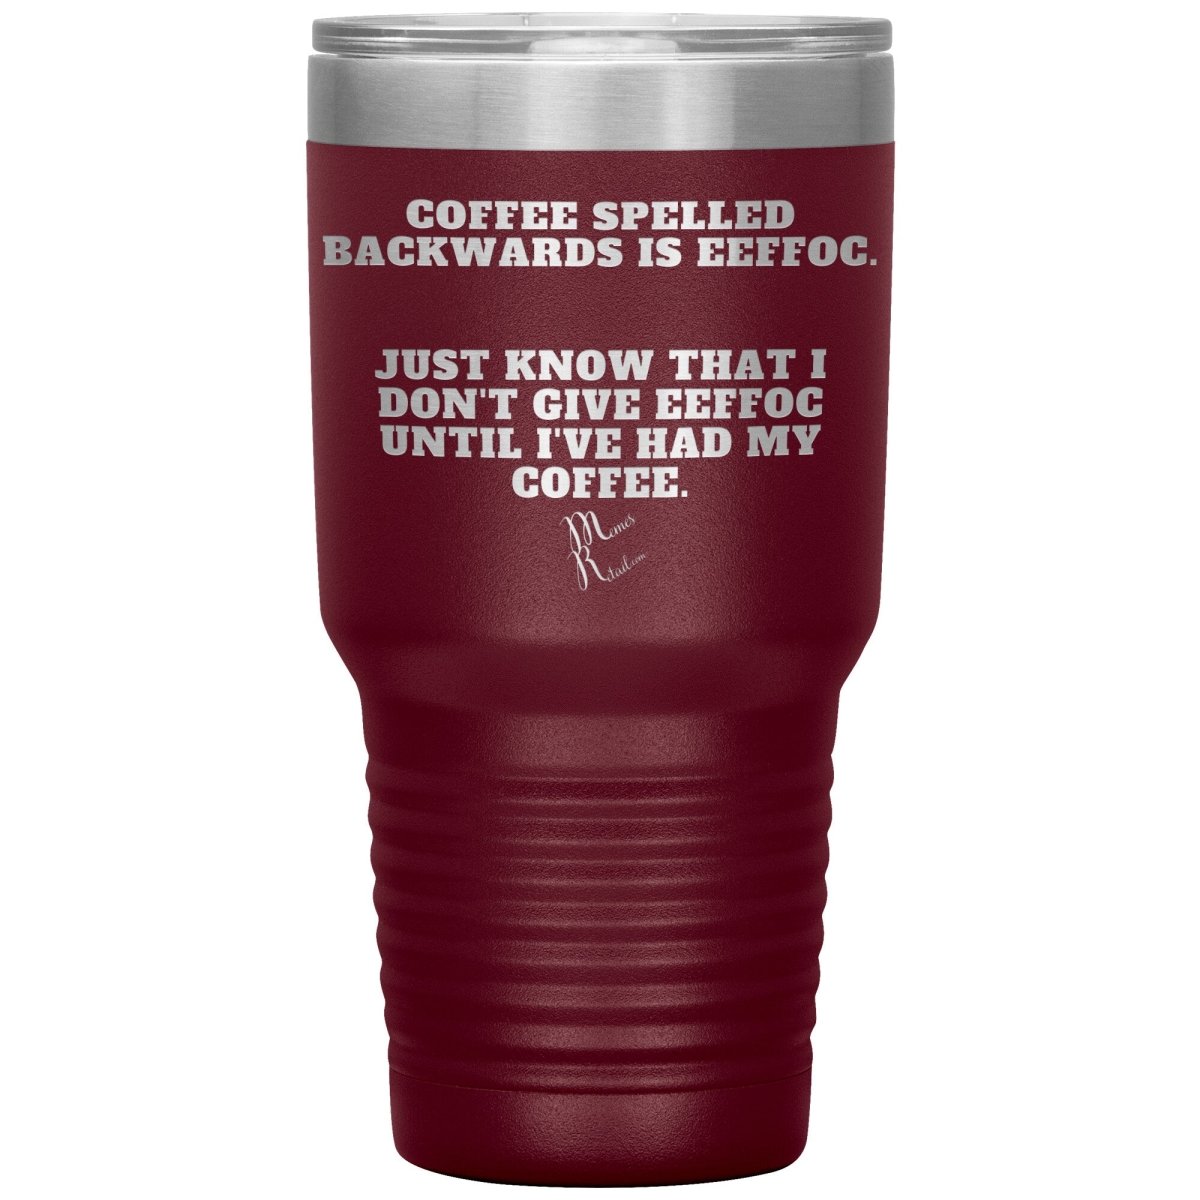 Coffee spelled backwards is eeffoc Tumblers, 30oz Insulated Tumbler / Maroon - MemesRetail.com